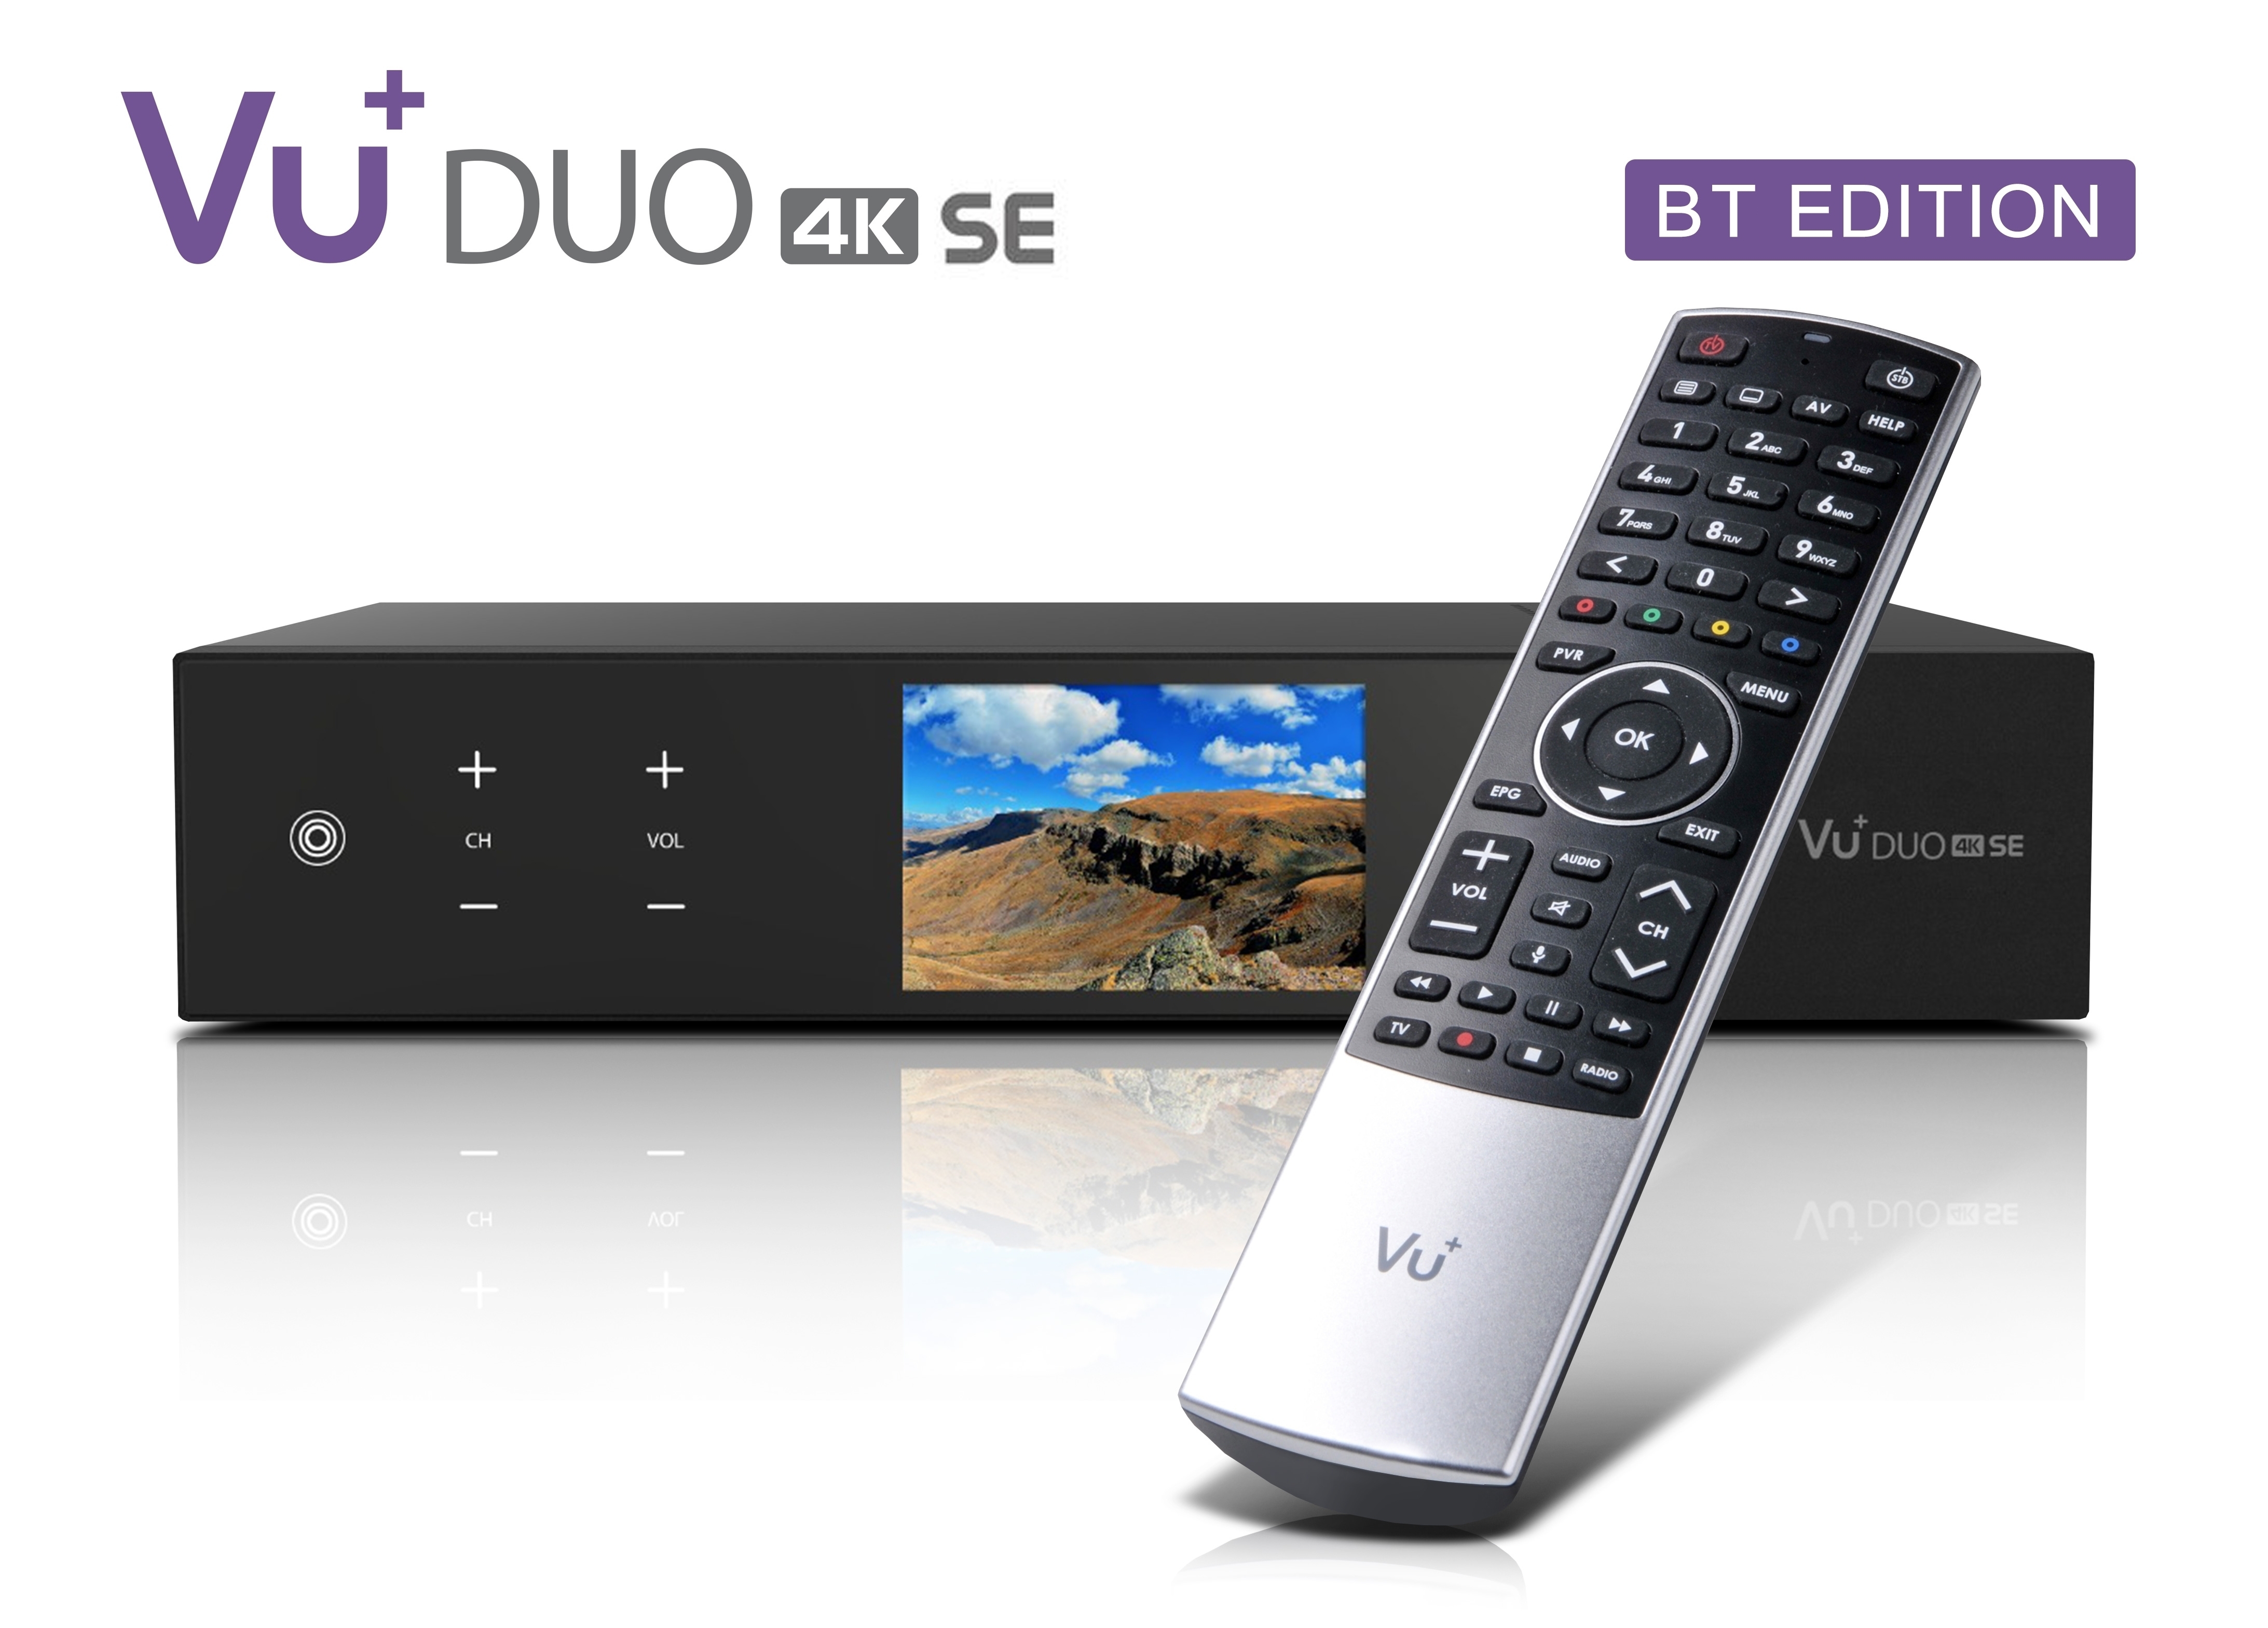 VU+ Duo 4K SE BT 1x DVB-S2X FBC Twin / 1x DVB-C FBC Tuner 1 TB HDD Linux Receiver UHD 2160p